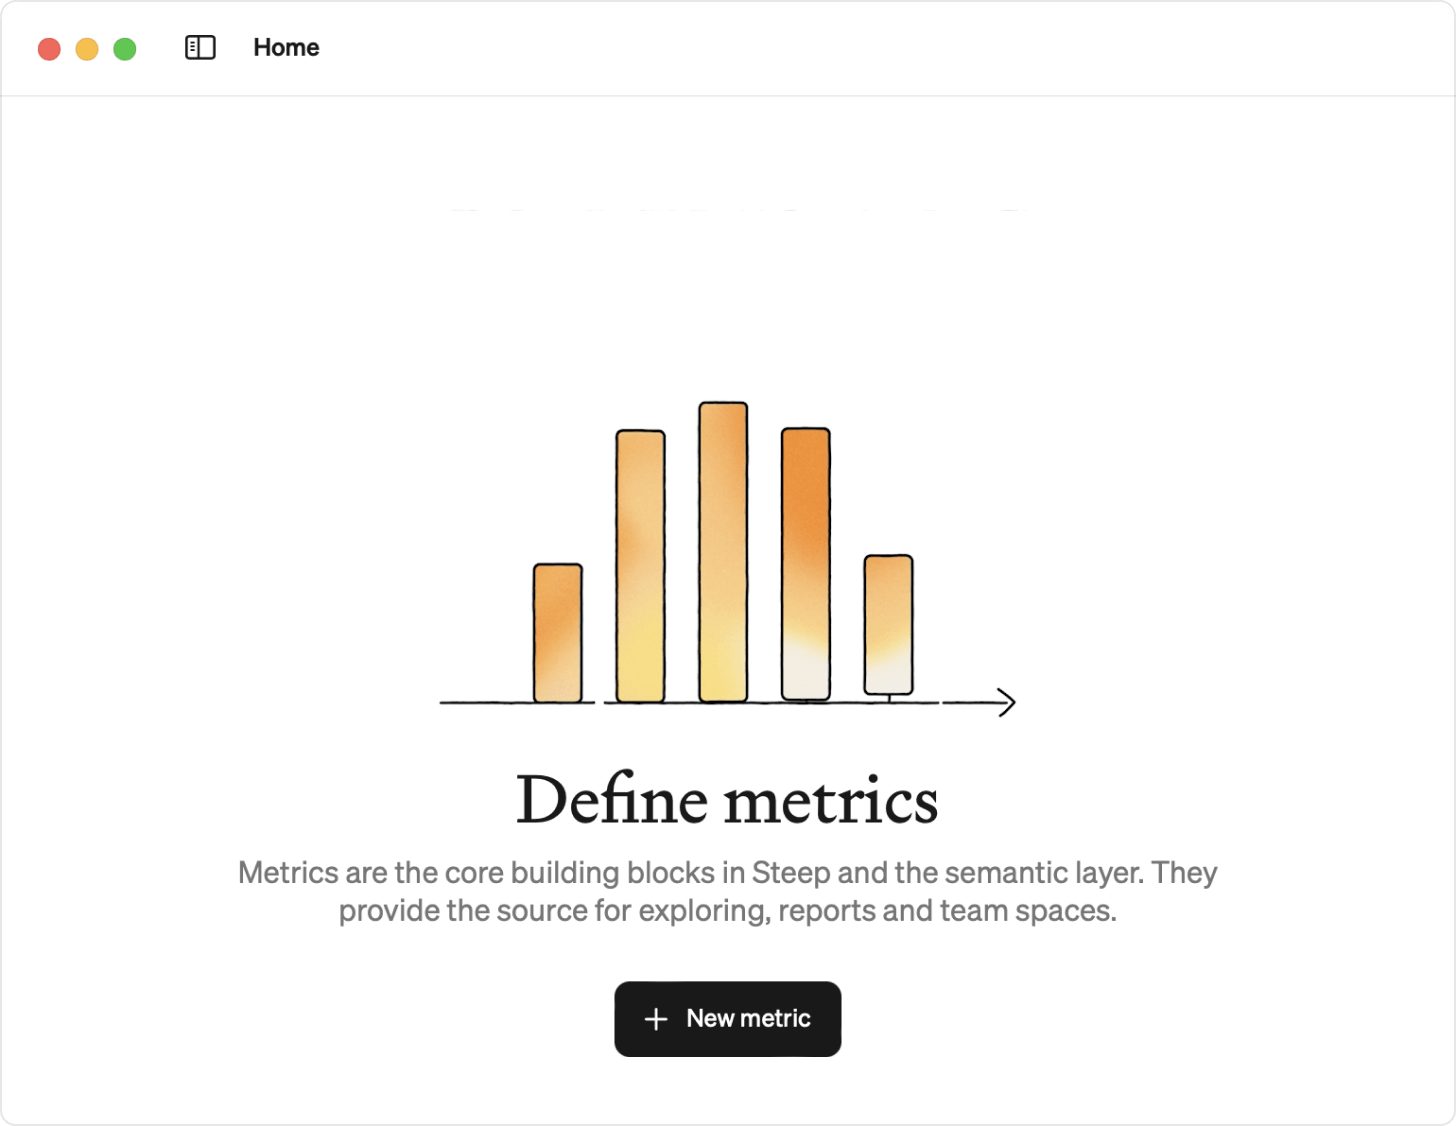 New metric